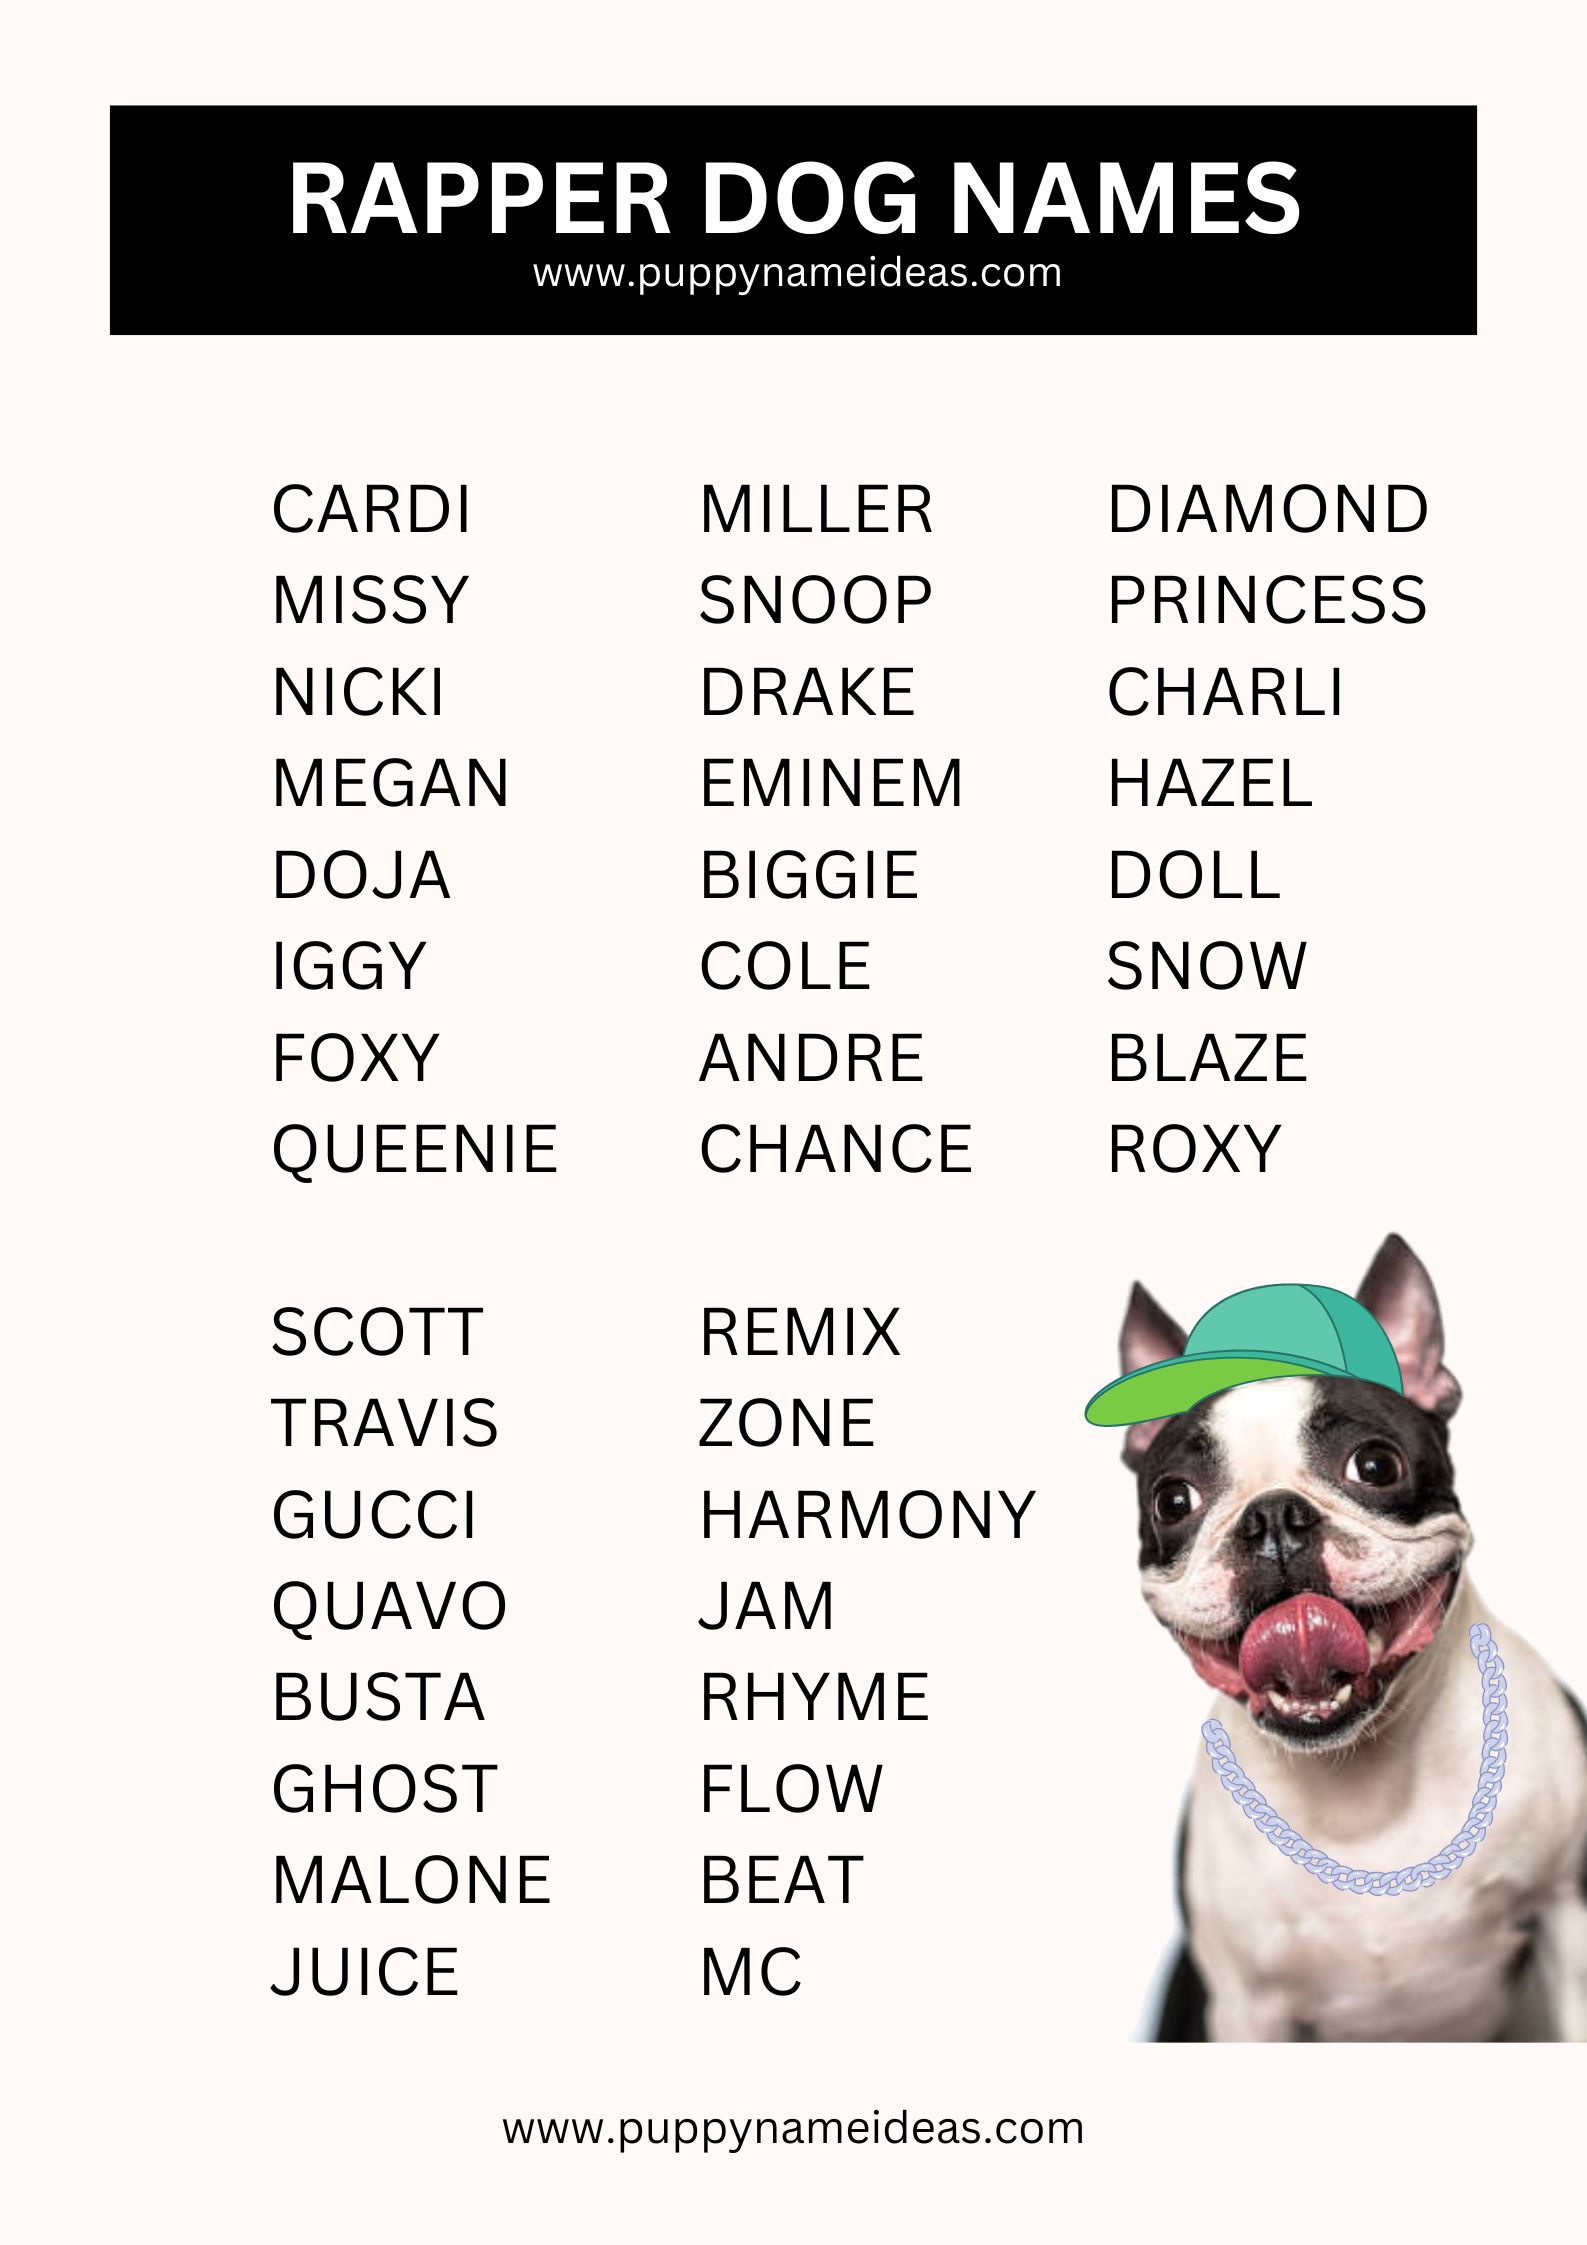 List Of Rapper Dog Names